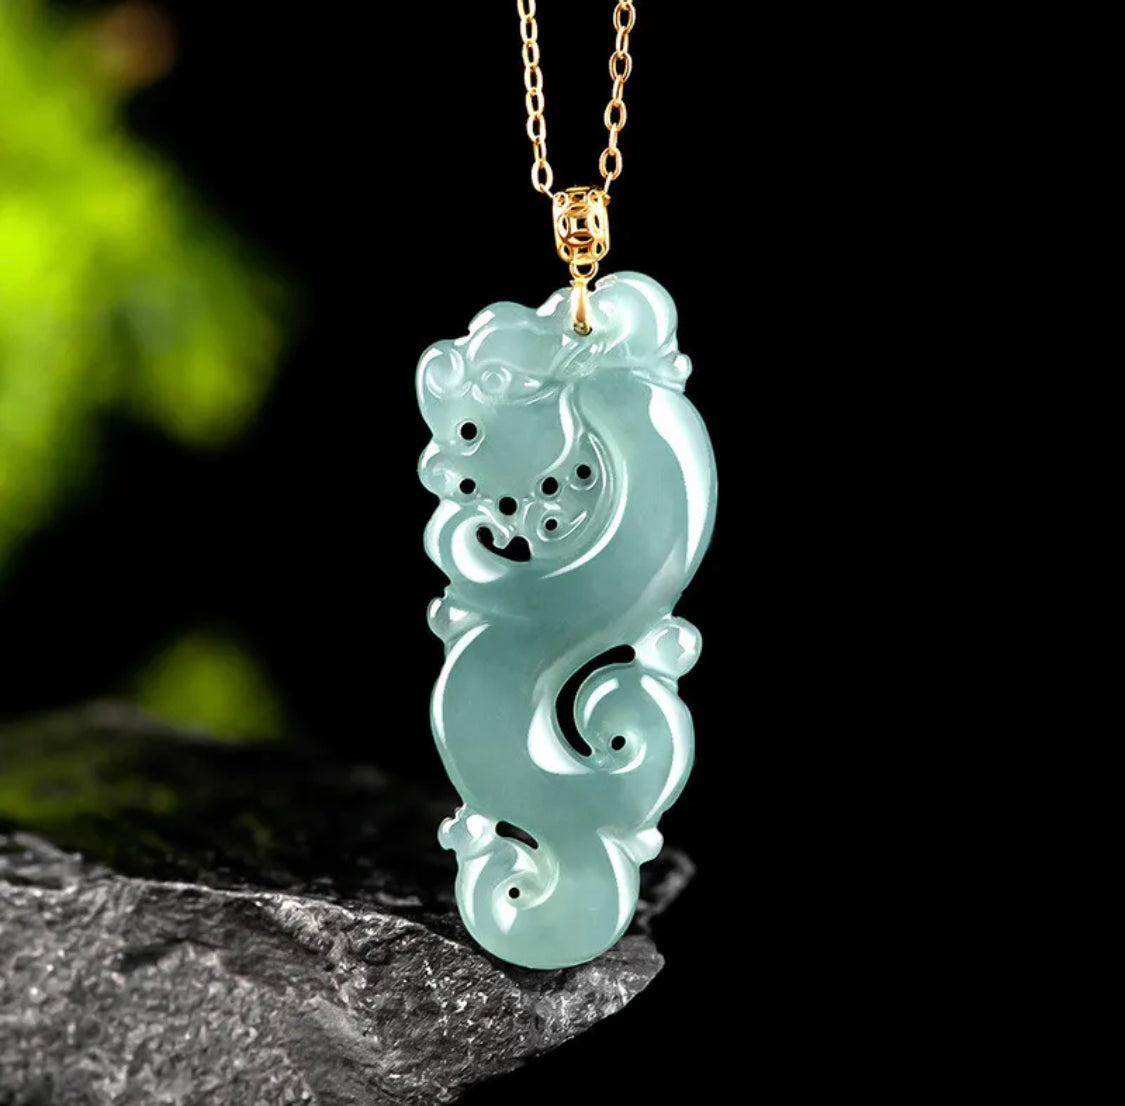 Jadeite Green Jade Pendant Certified Jade - Chinese Lunar Year of the Dragon